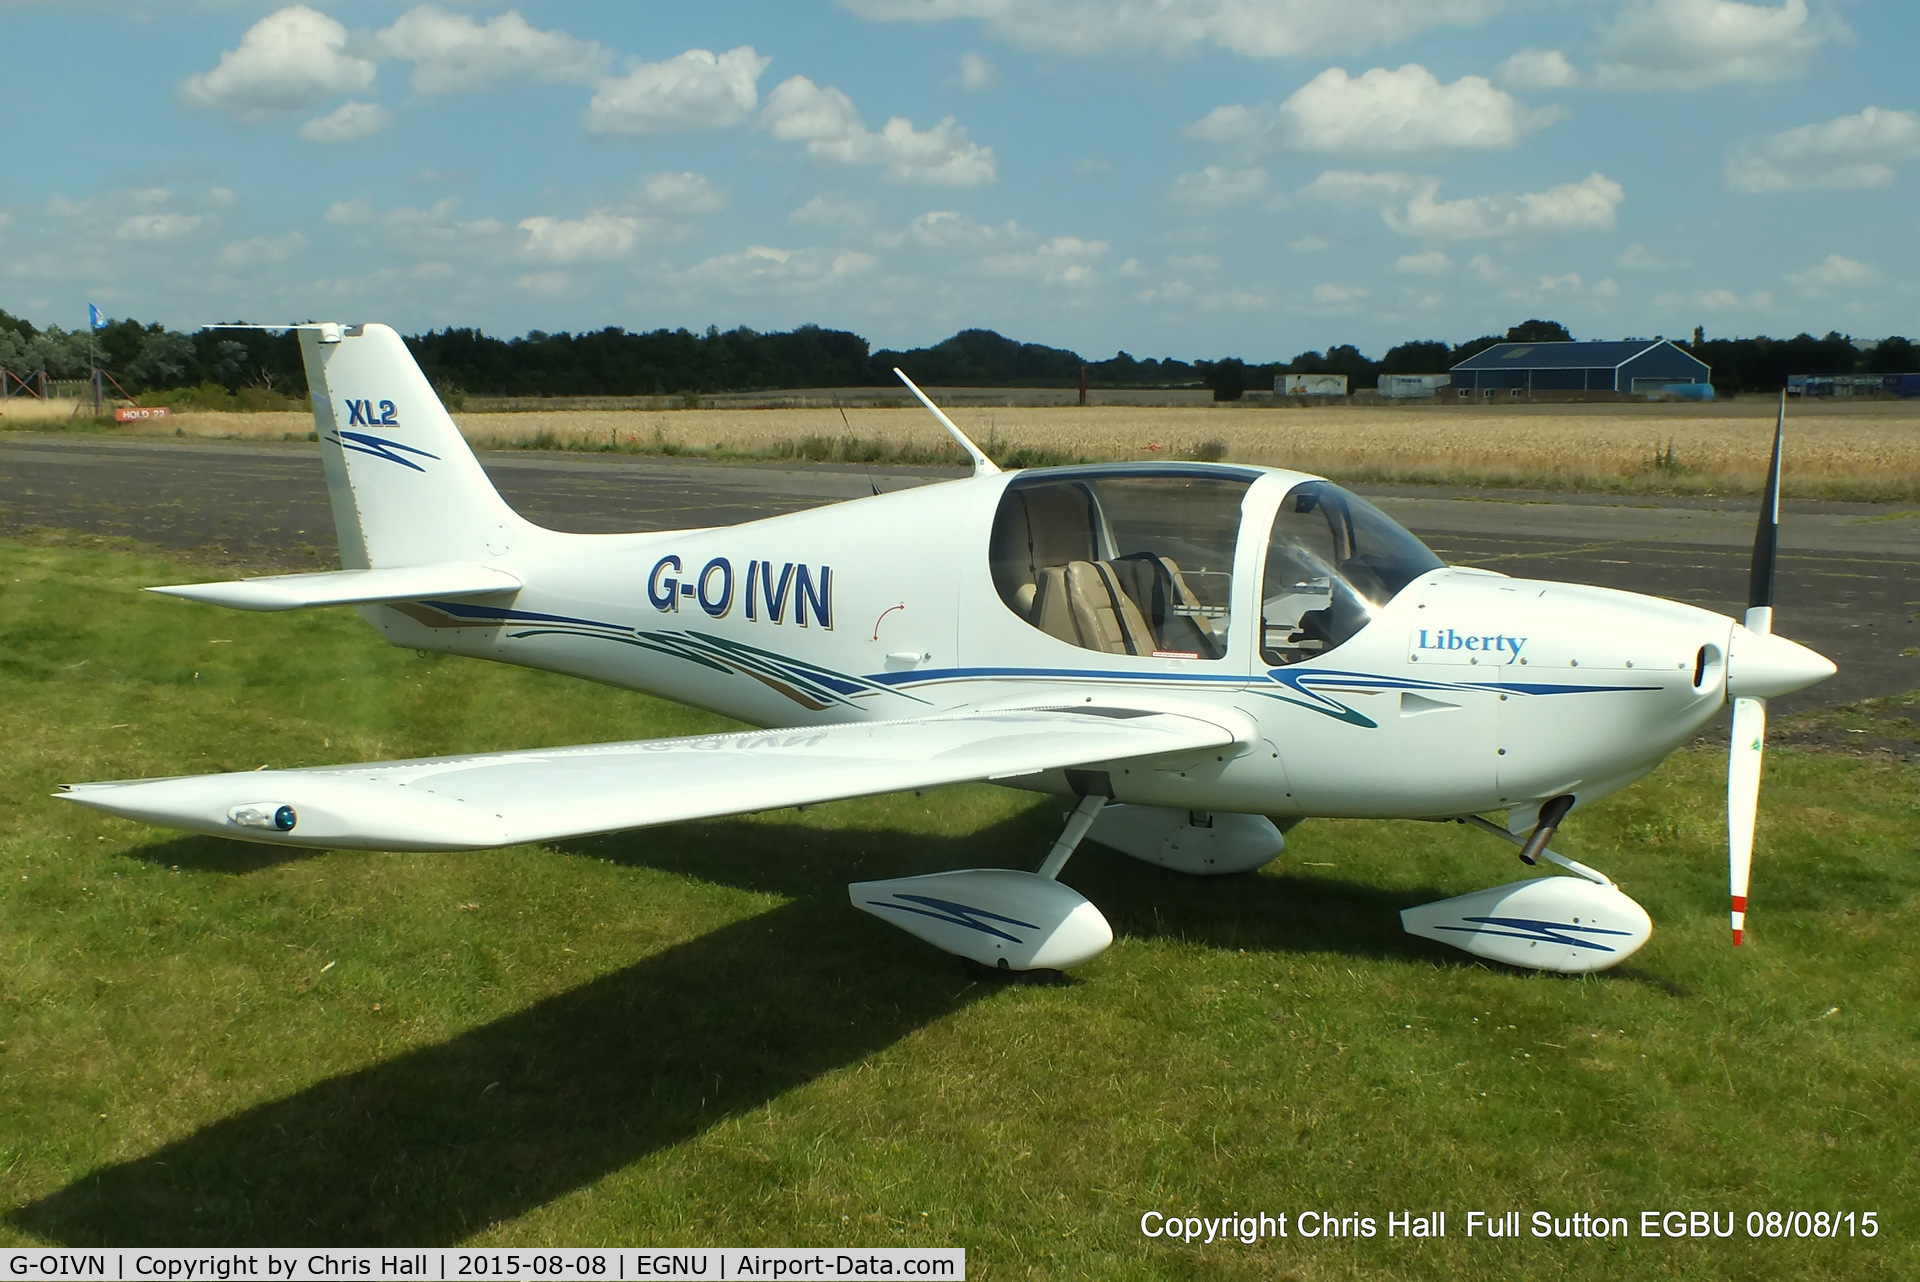 G-OIVN, 2005 Liberty XL-2 C/N 0008, at the Vale of York LAA strut flyin, Full Sutton